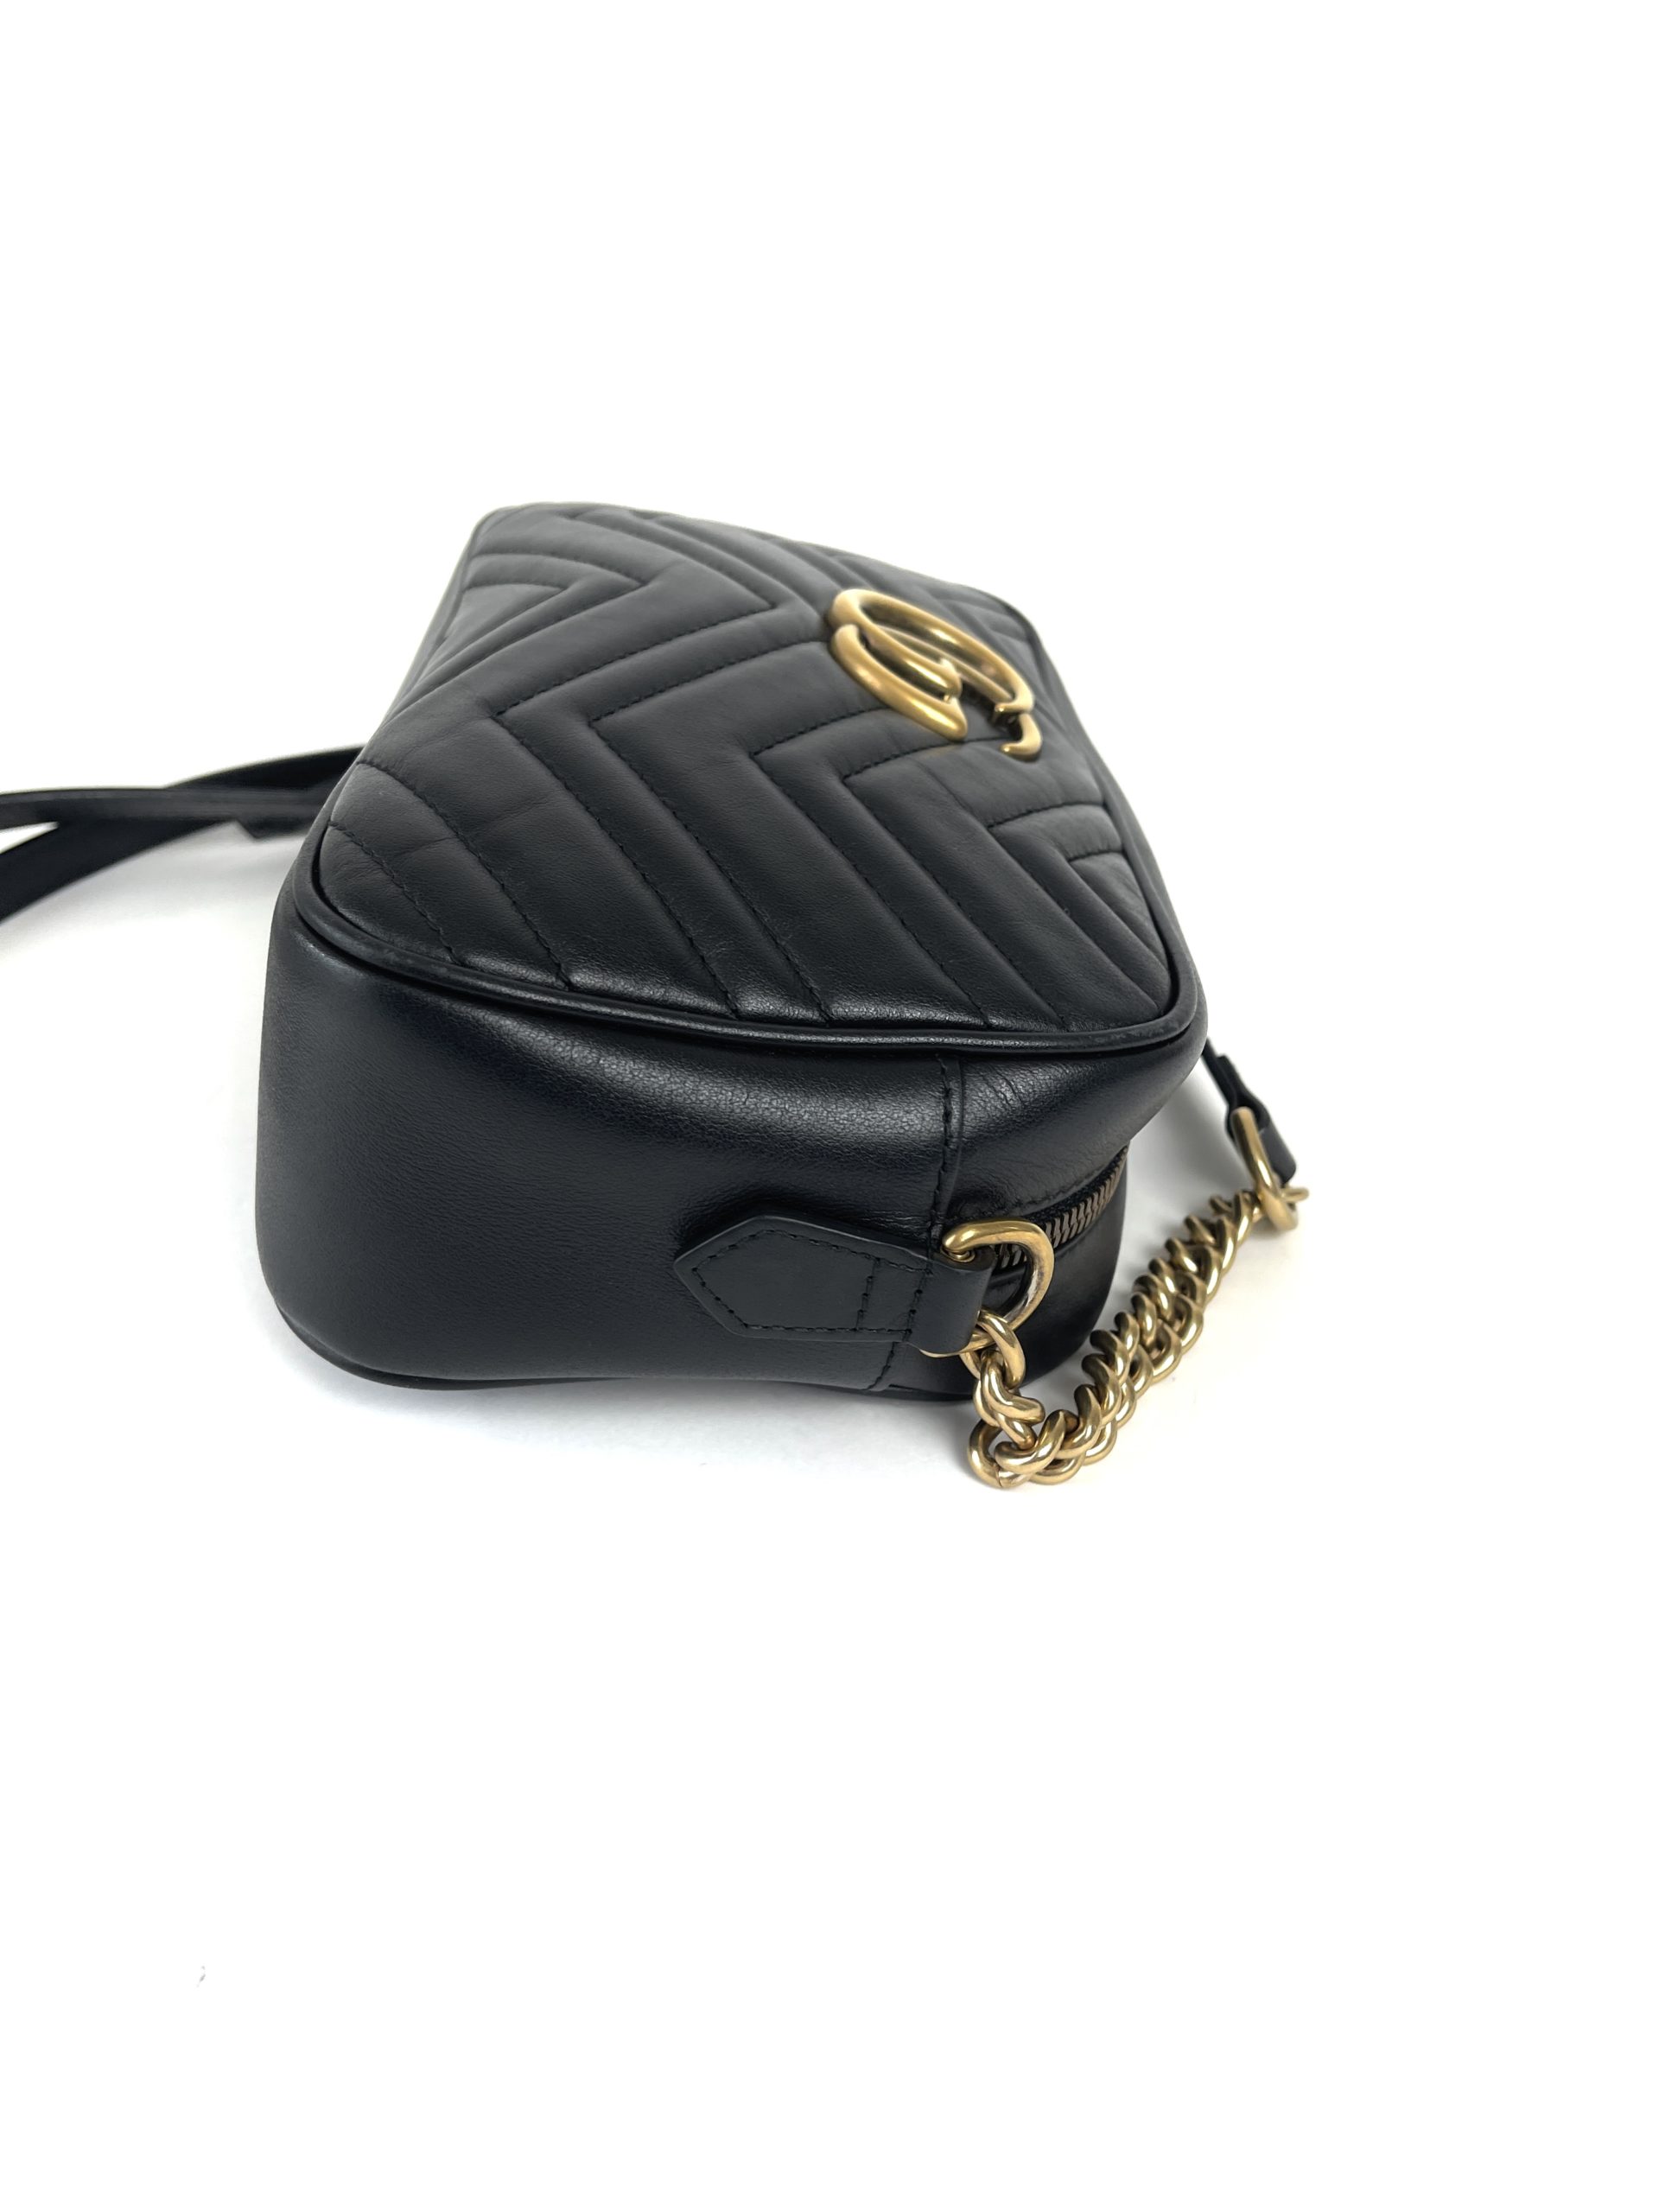 Gucci GG Marmont Bag vs. Louis Vuitton Pochette Metis 